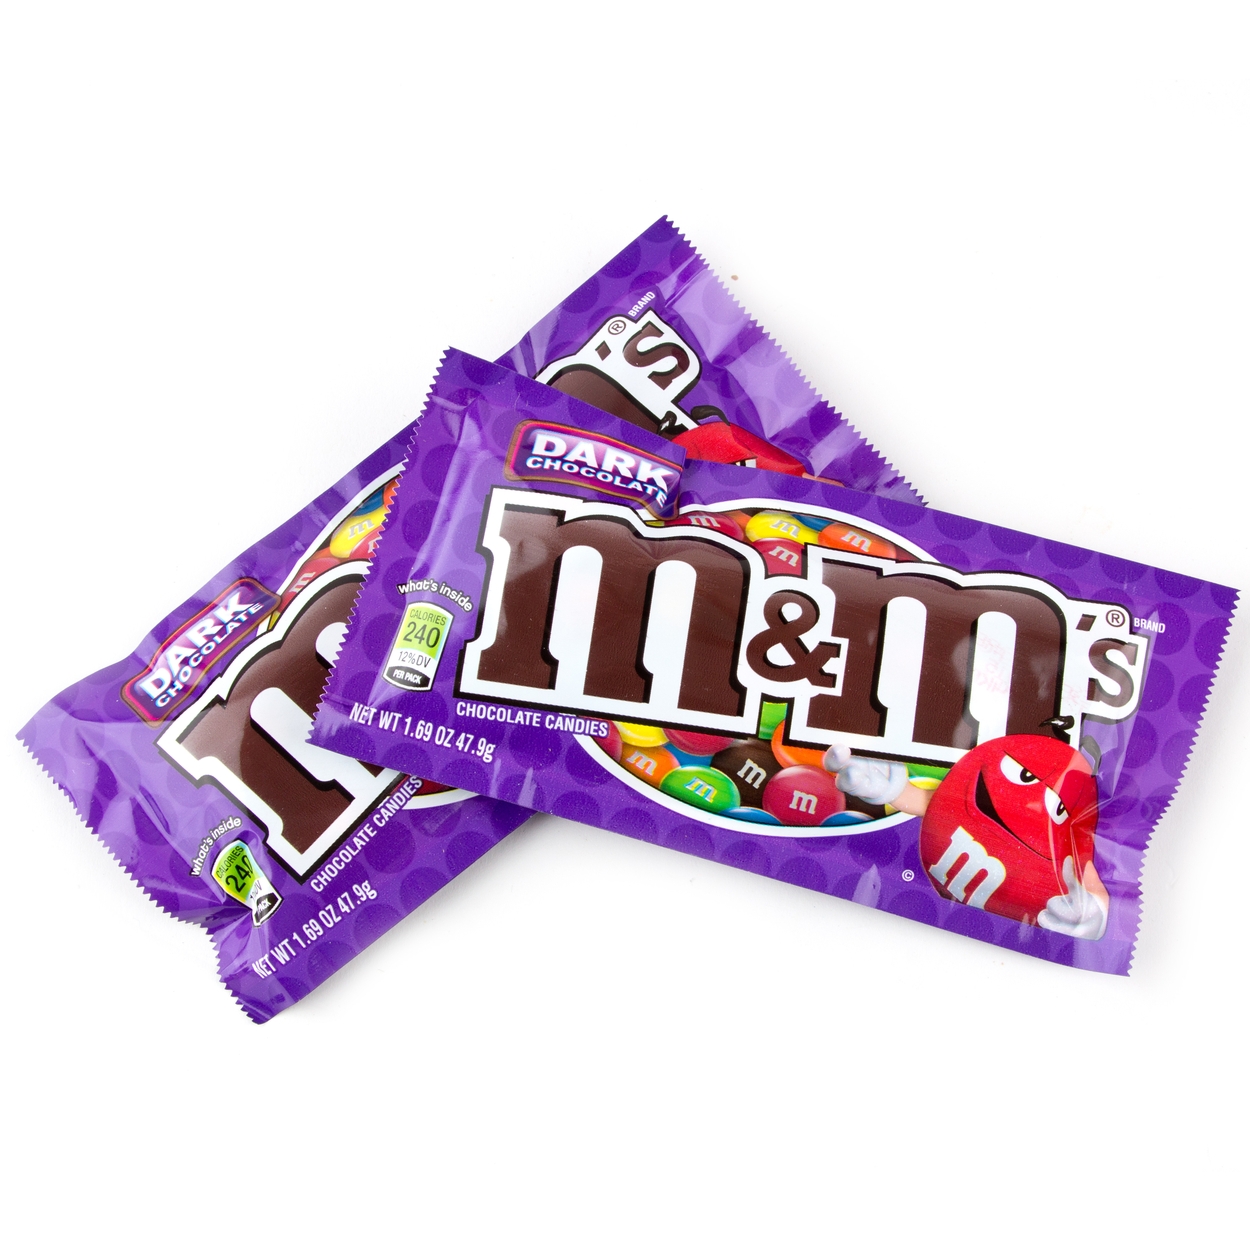 M&M's Dark Chocolate Bar with Minis, 4 Oz.